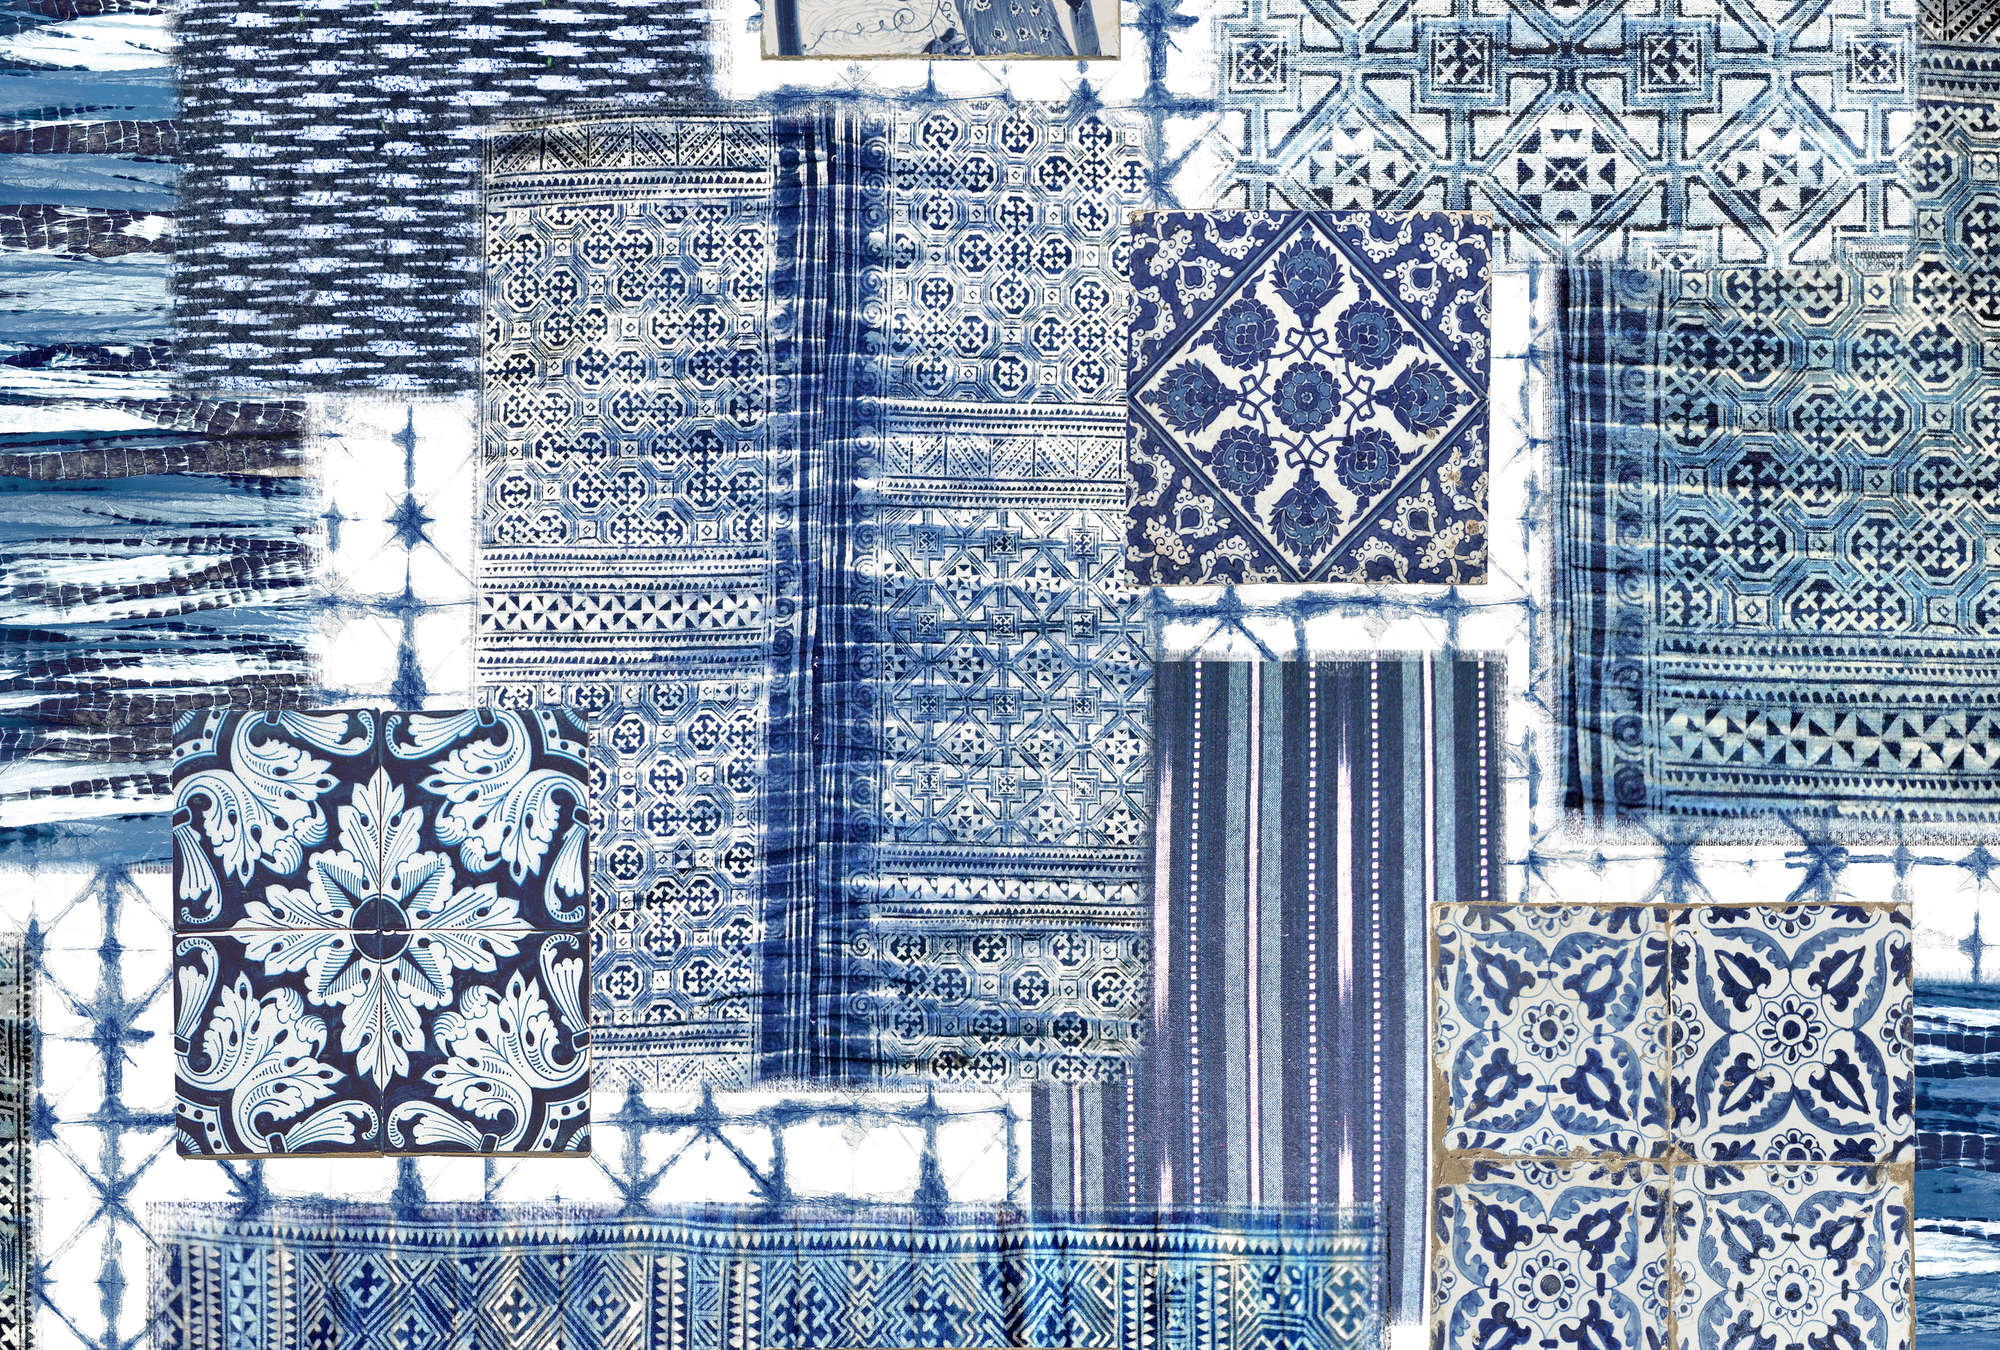             Patchwork mural, Delft tiles & patterned - Blue, White
        